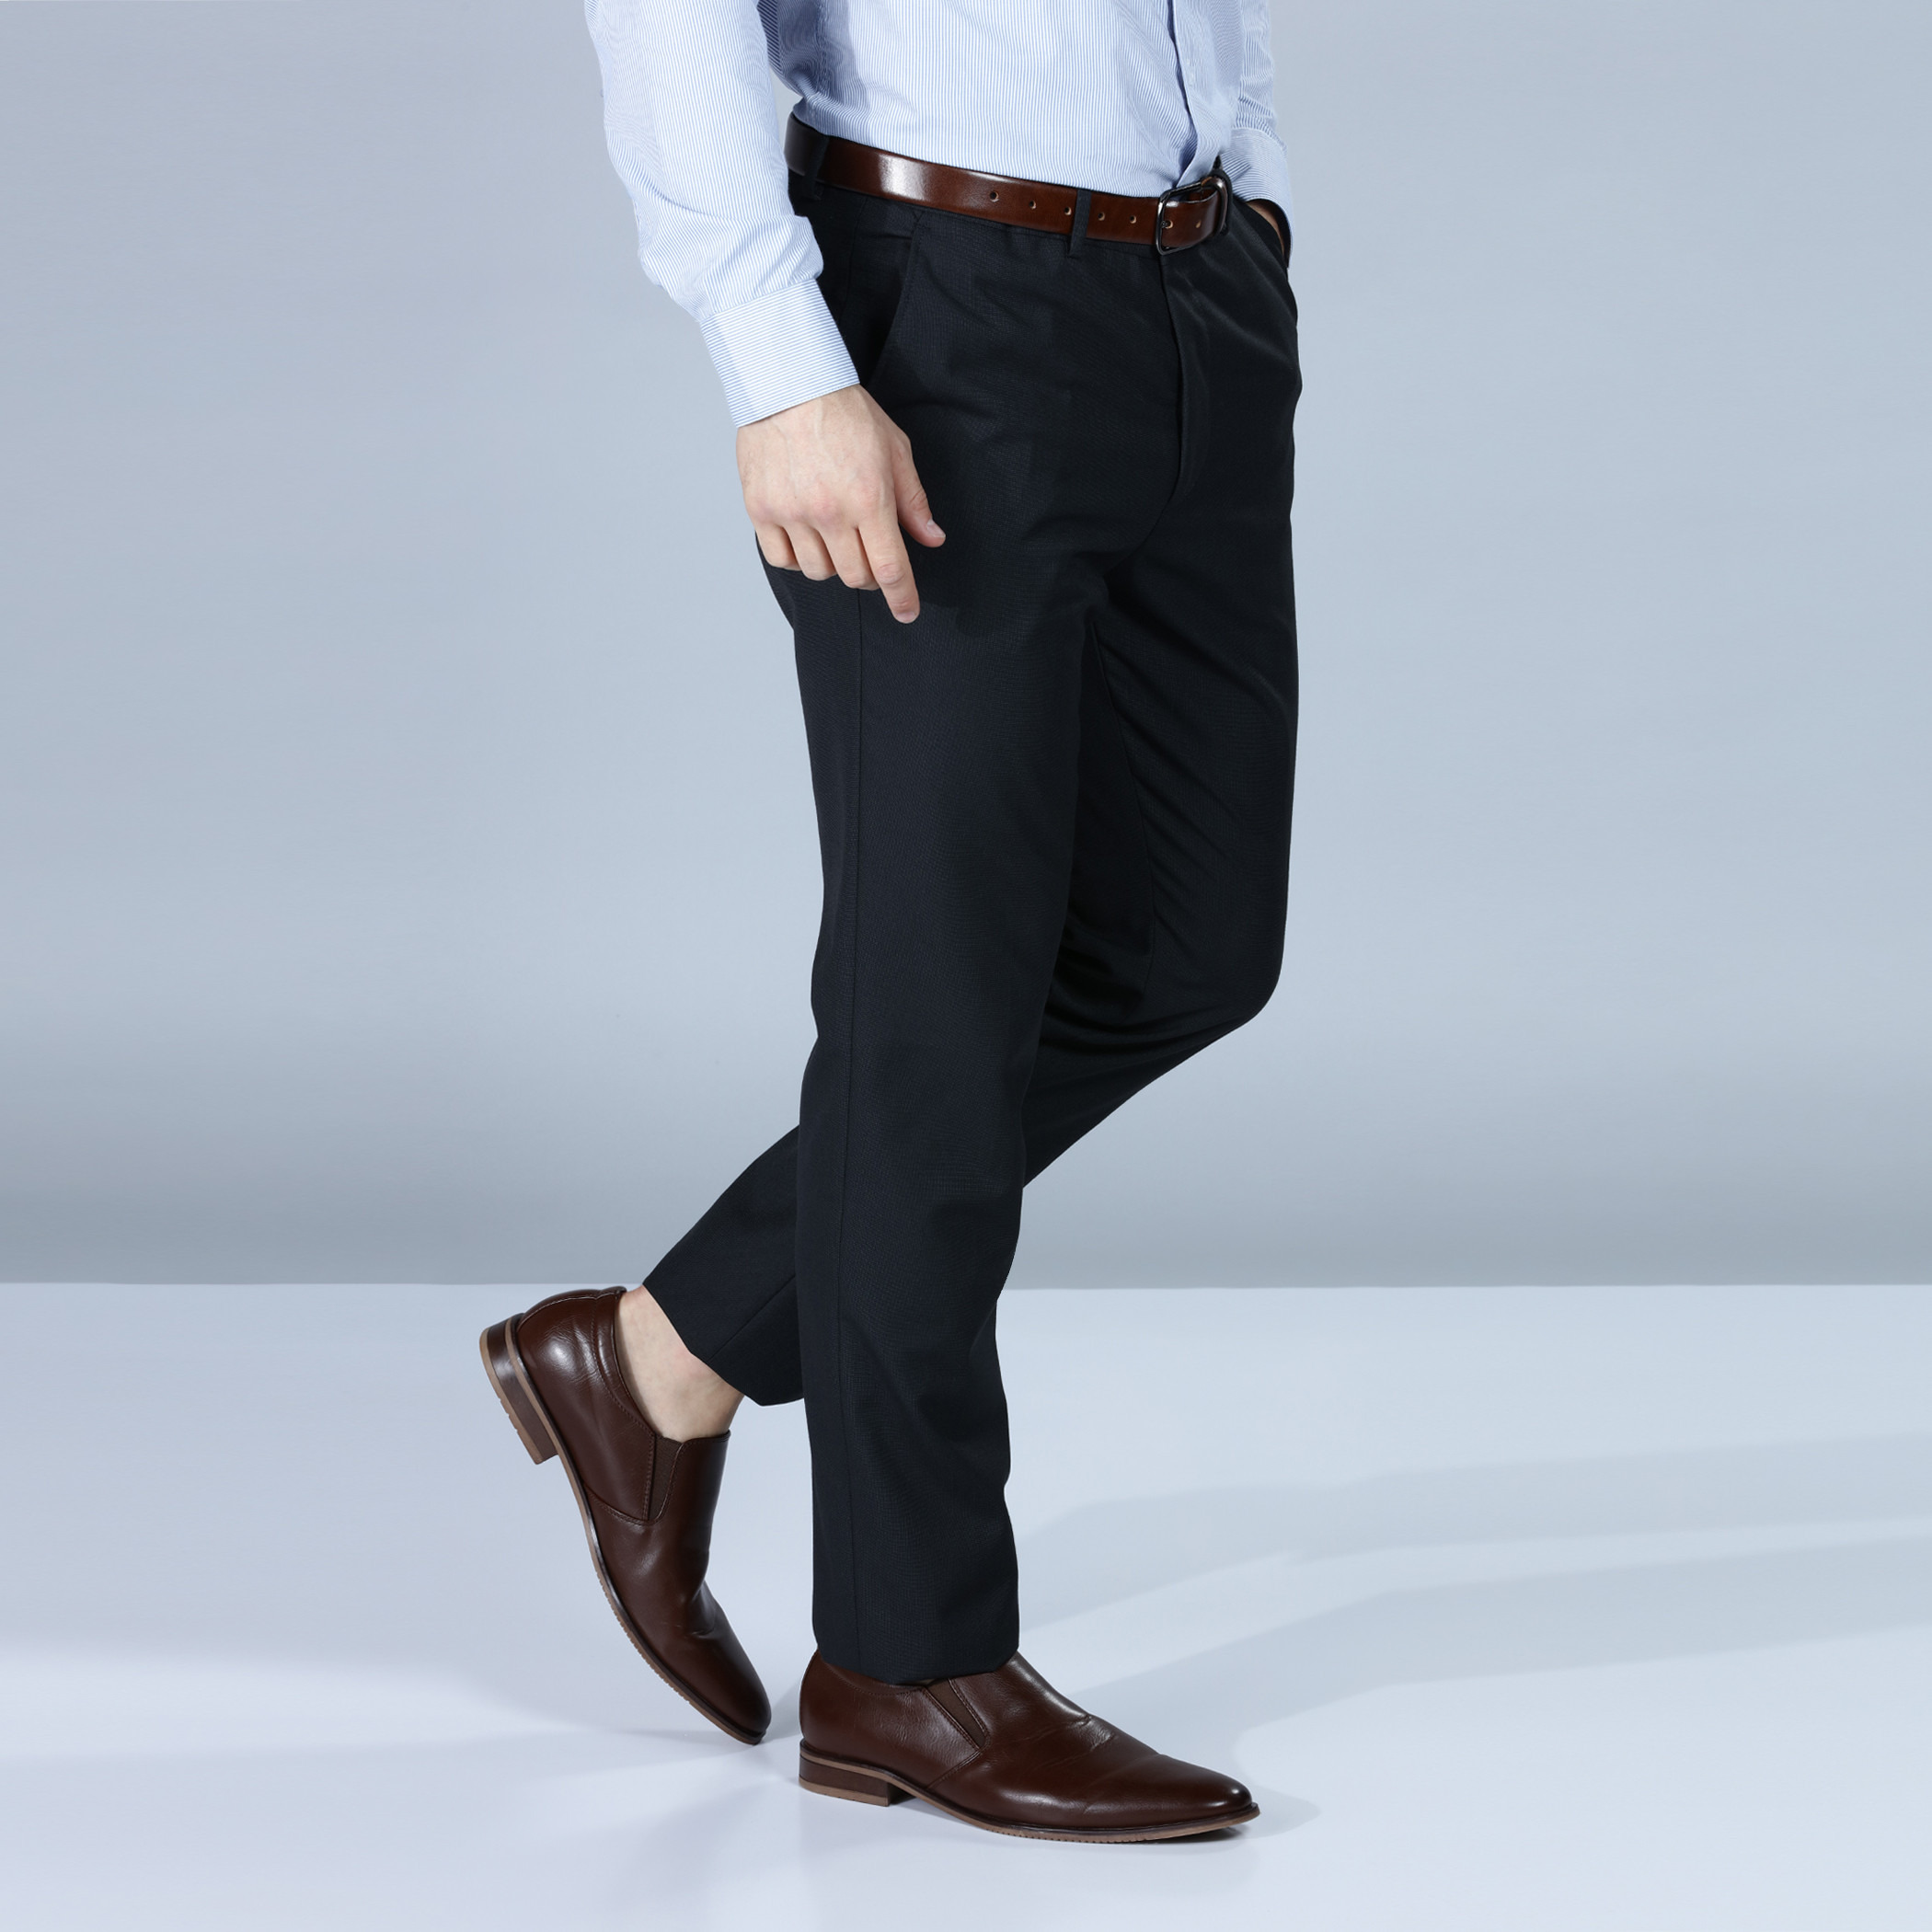 Buy Men Grey Solid Slim Fit Formal Trousers Online - 707664 | Peter England